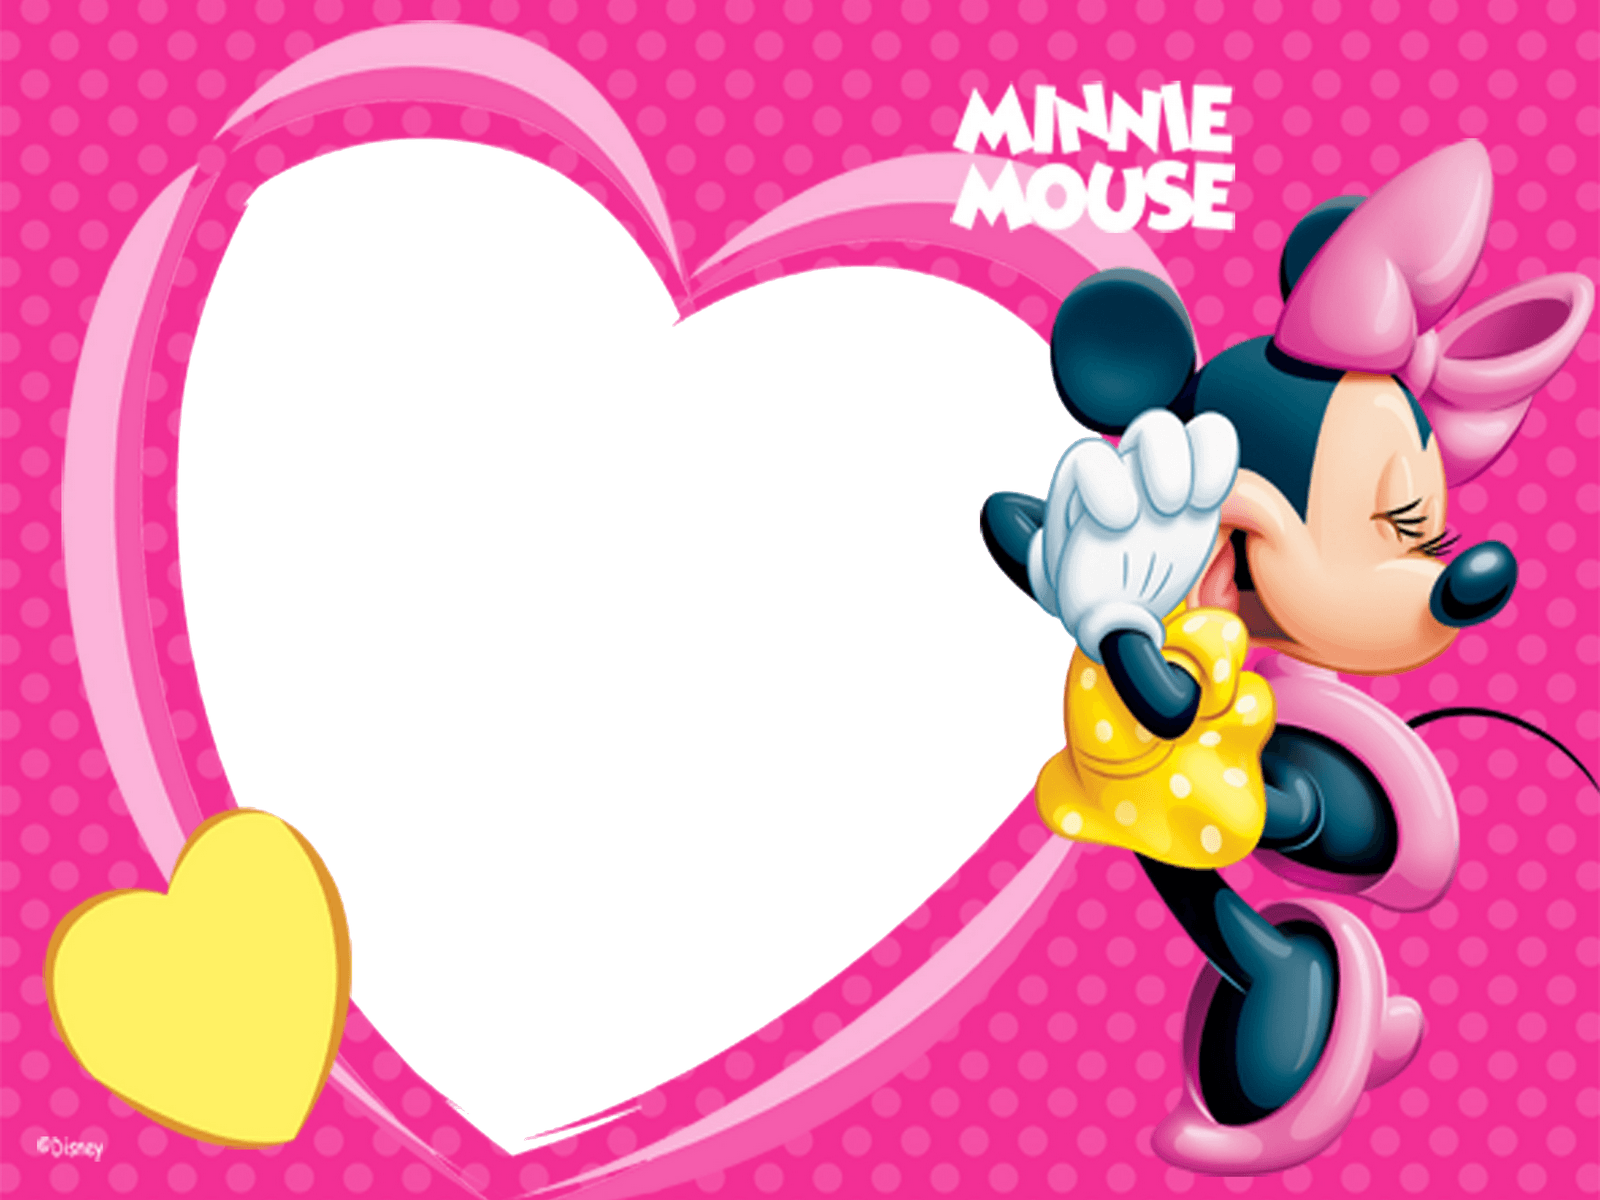 Minnie Mouse Image Wallpaper para FB Cover - Dibujos animados Fondos de pantalla